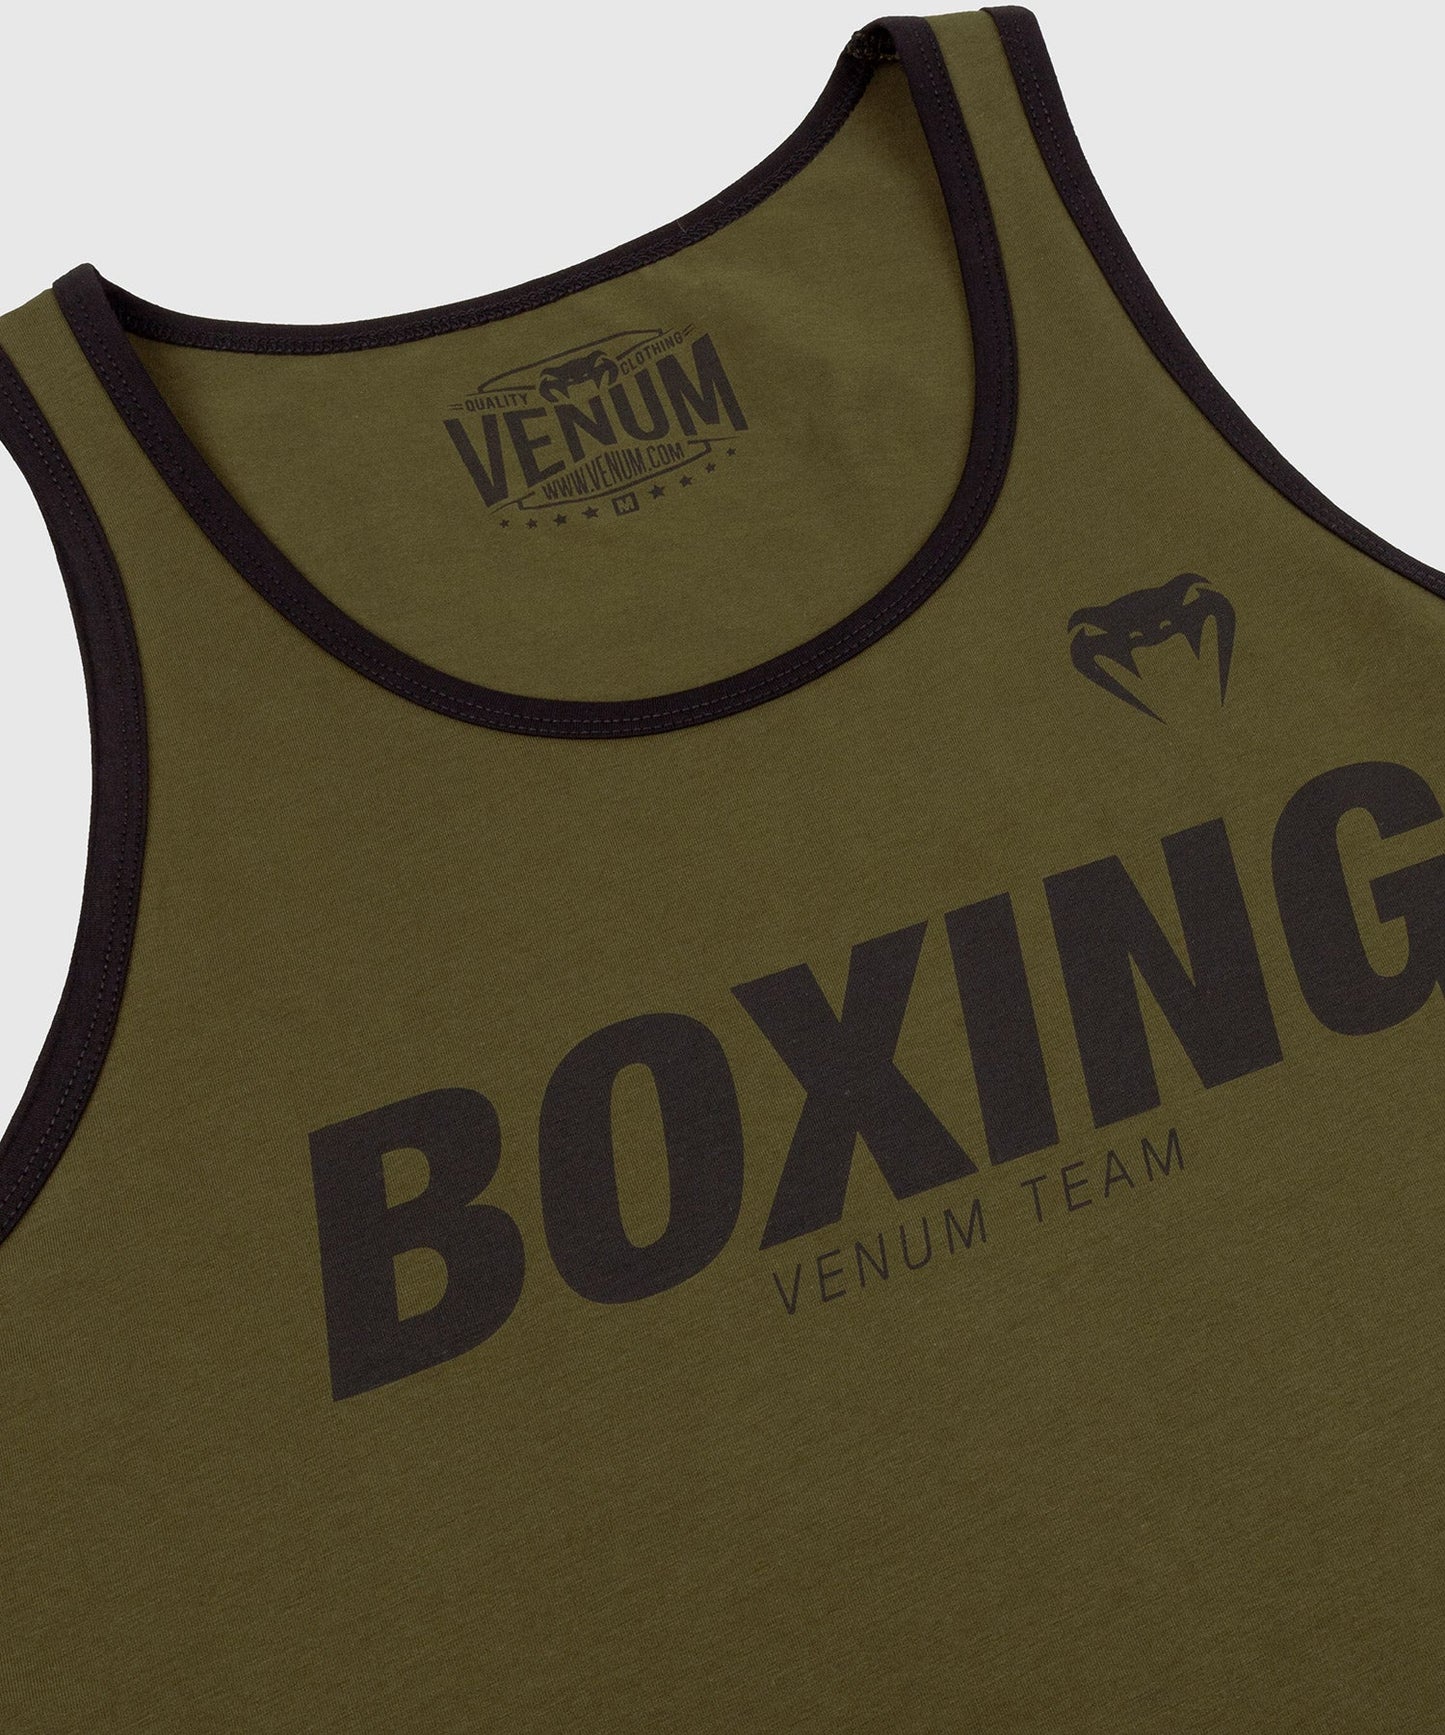 Venum Boxing VT Tank Top - Khaki/Schwarz